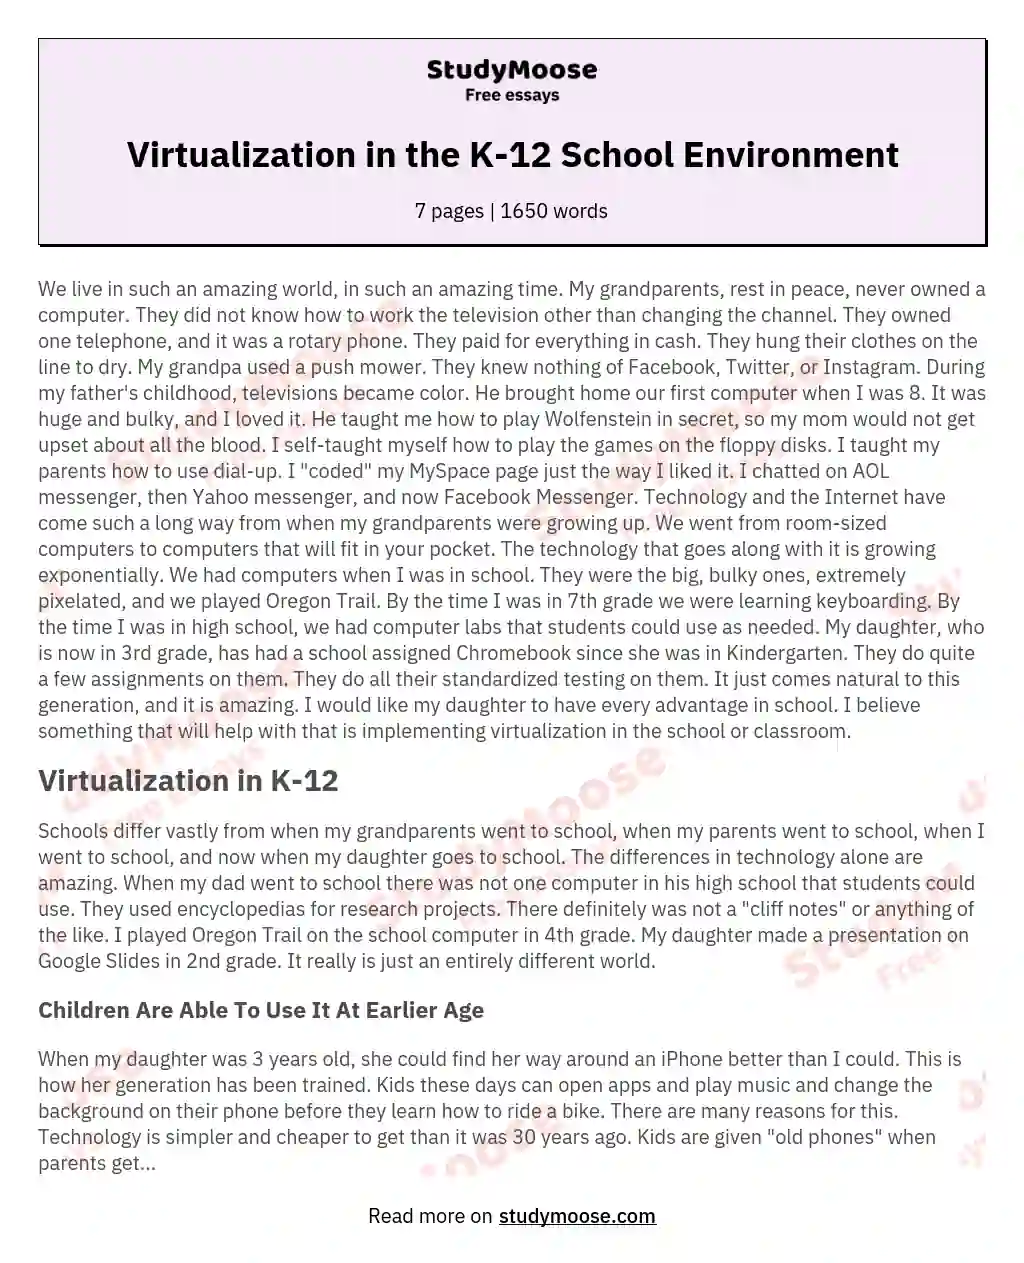 Virtualization in the K-12 School Environment essay